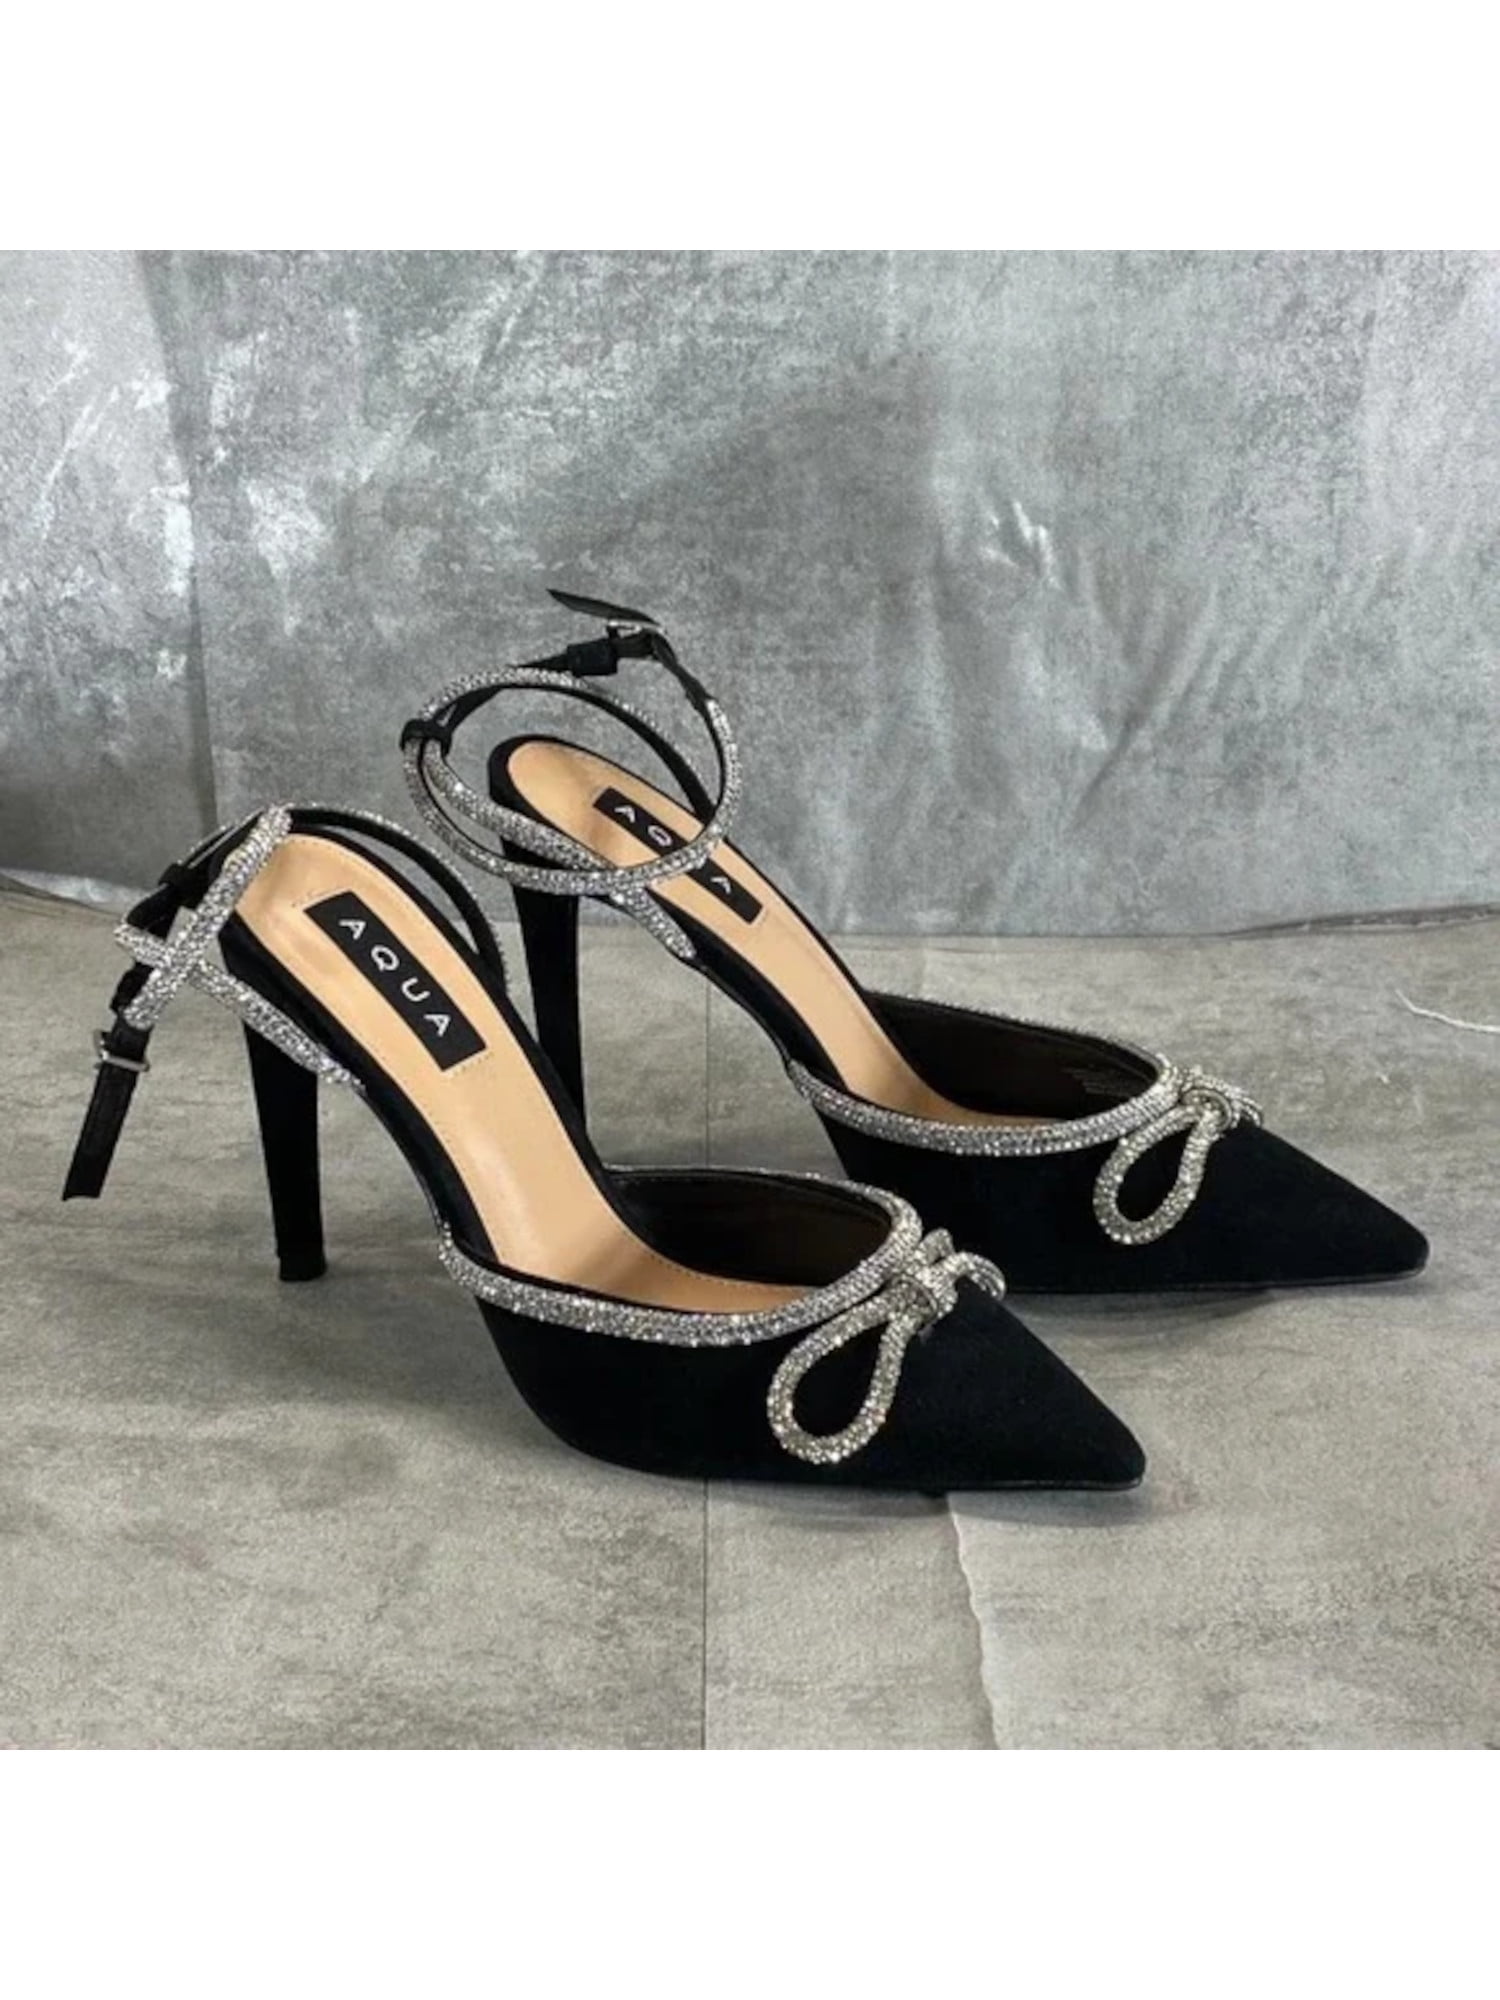 Gianni Bini Haydn Clear Rhinestone Bow Ankle Strap Dress Heels | Dillard's